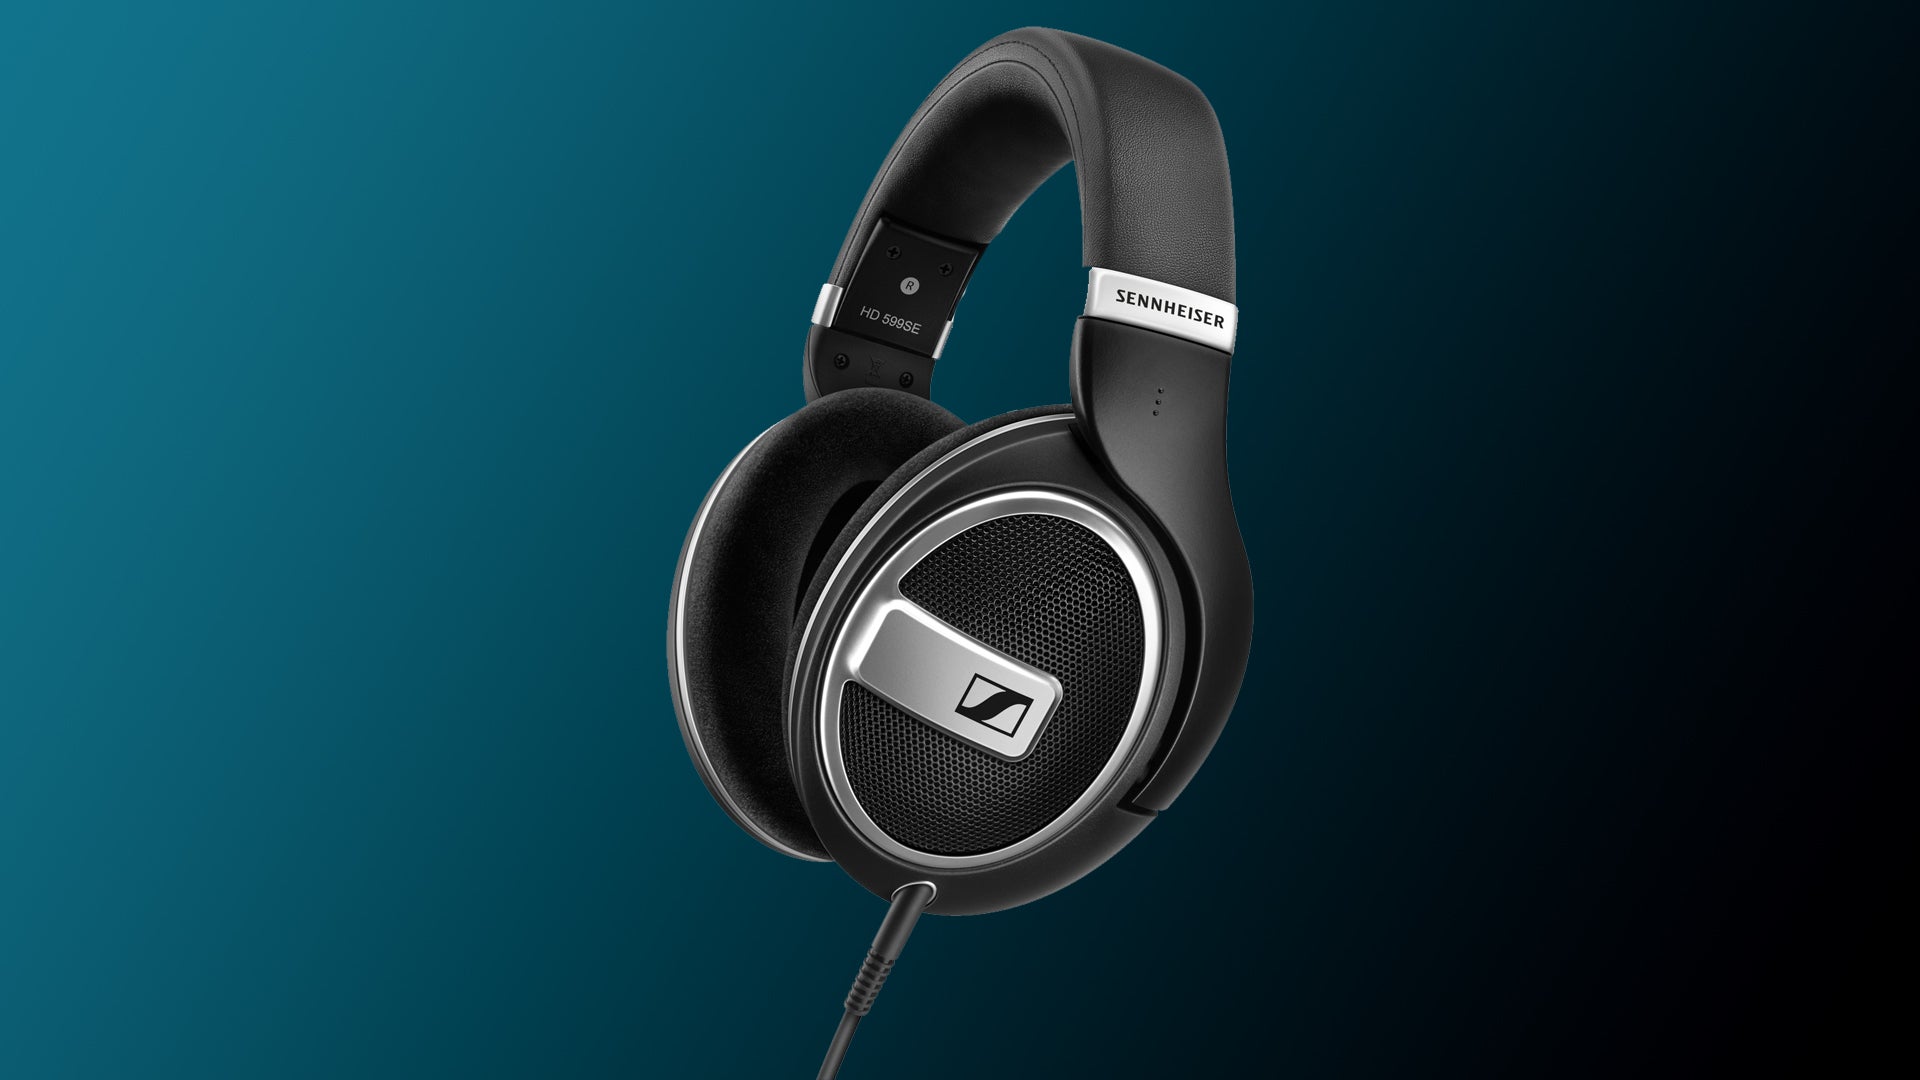 Sennheiser's legendary HD 599 open-back headphones have had a